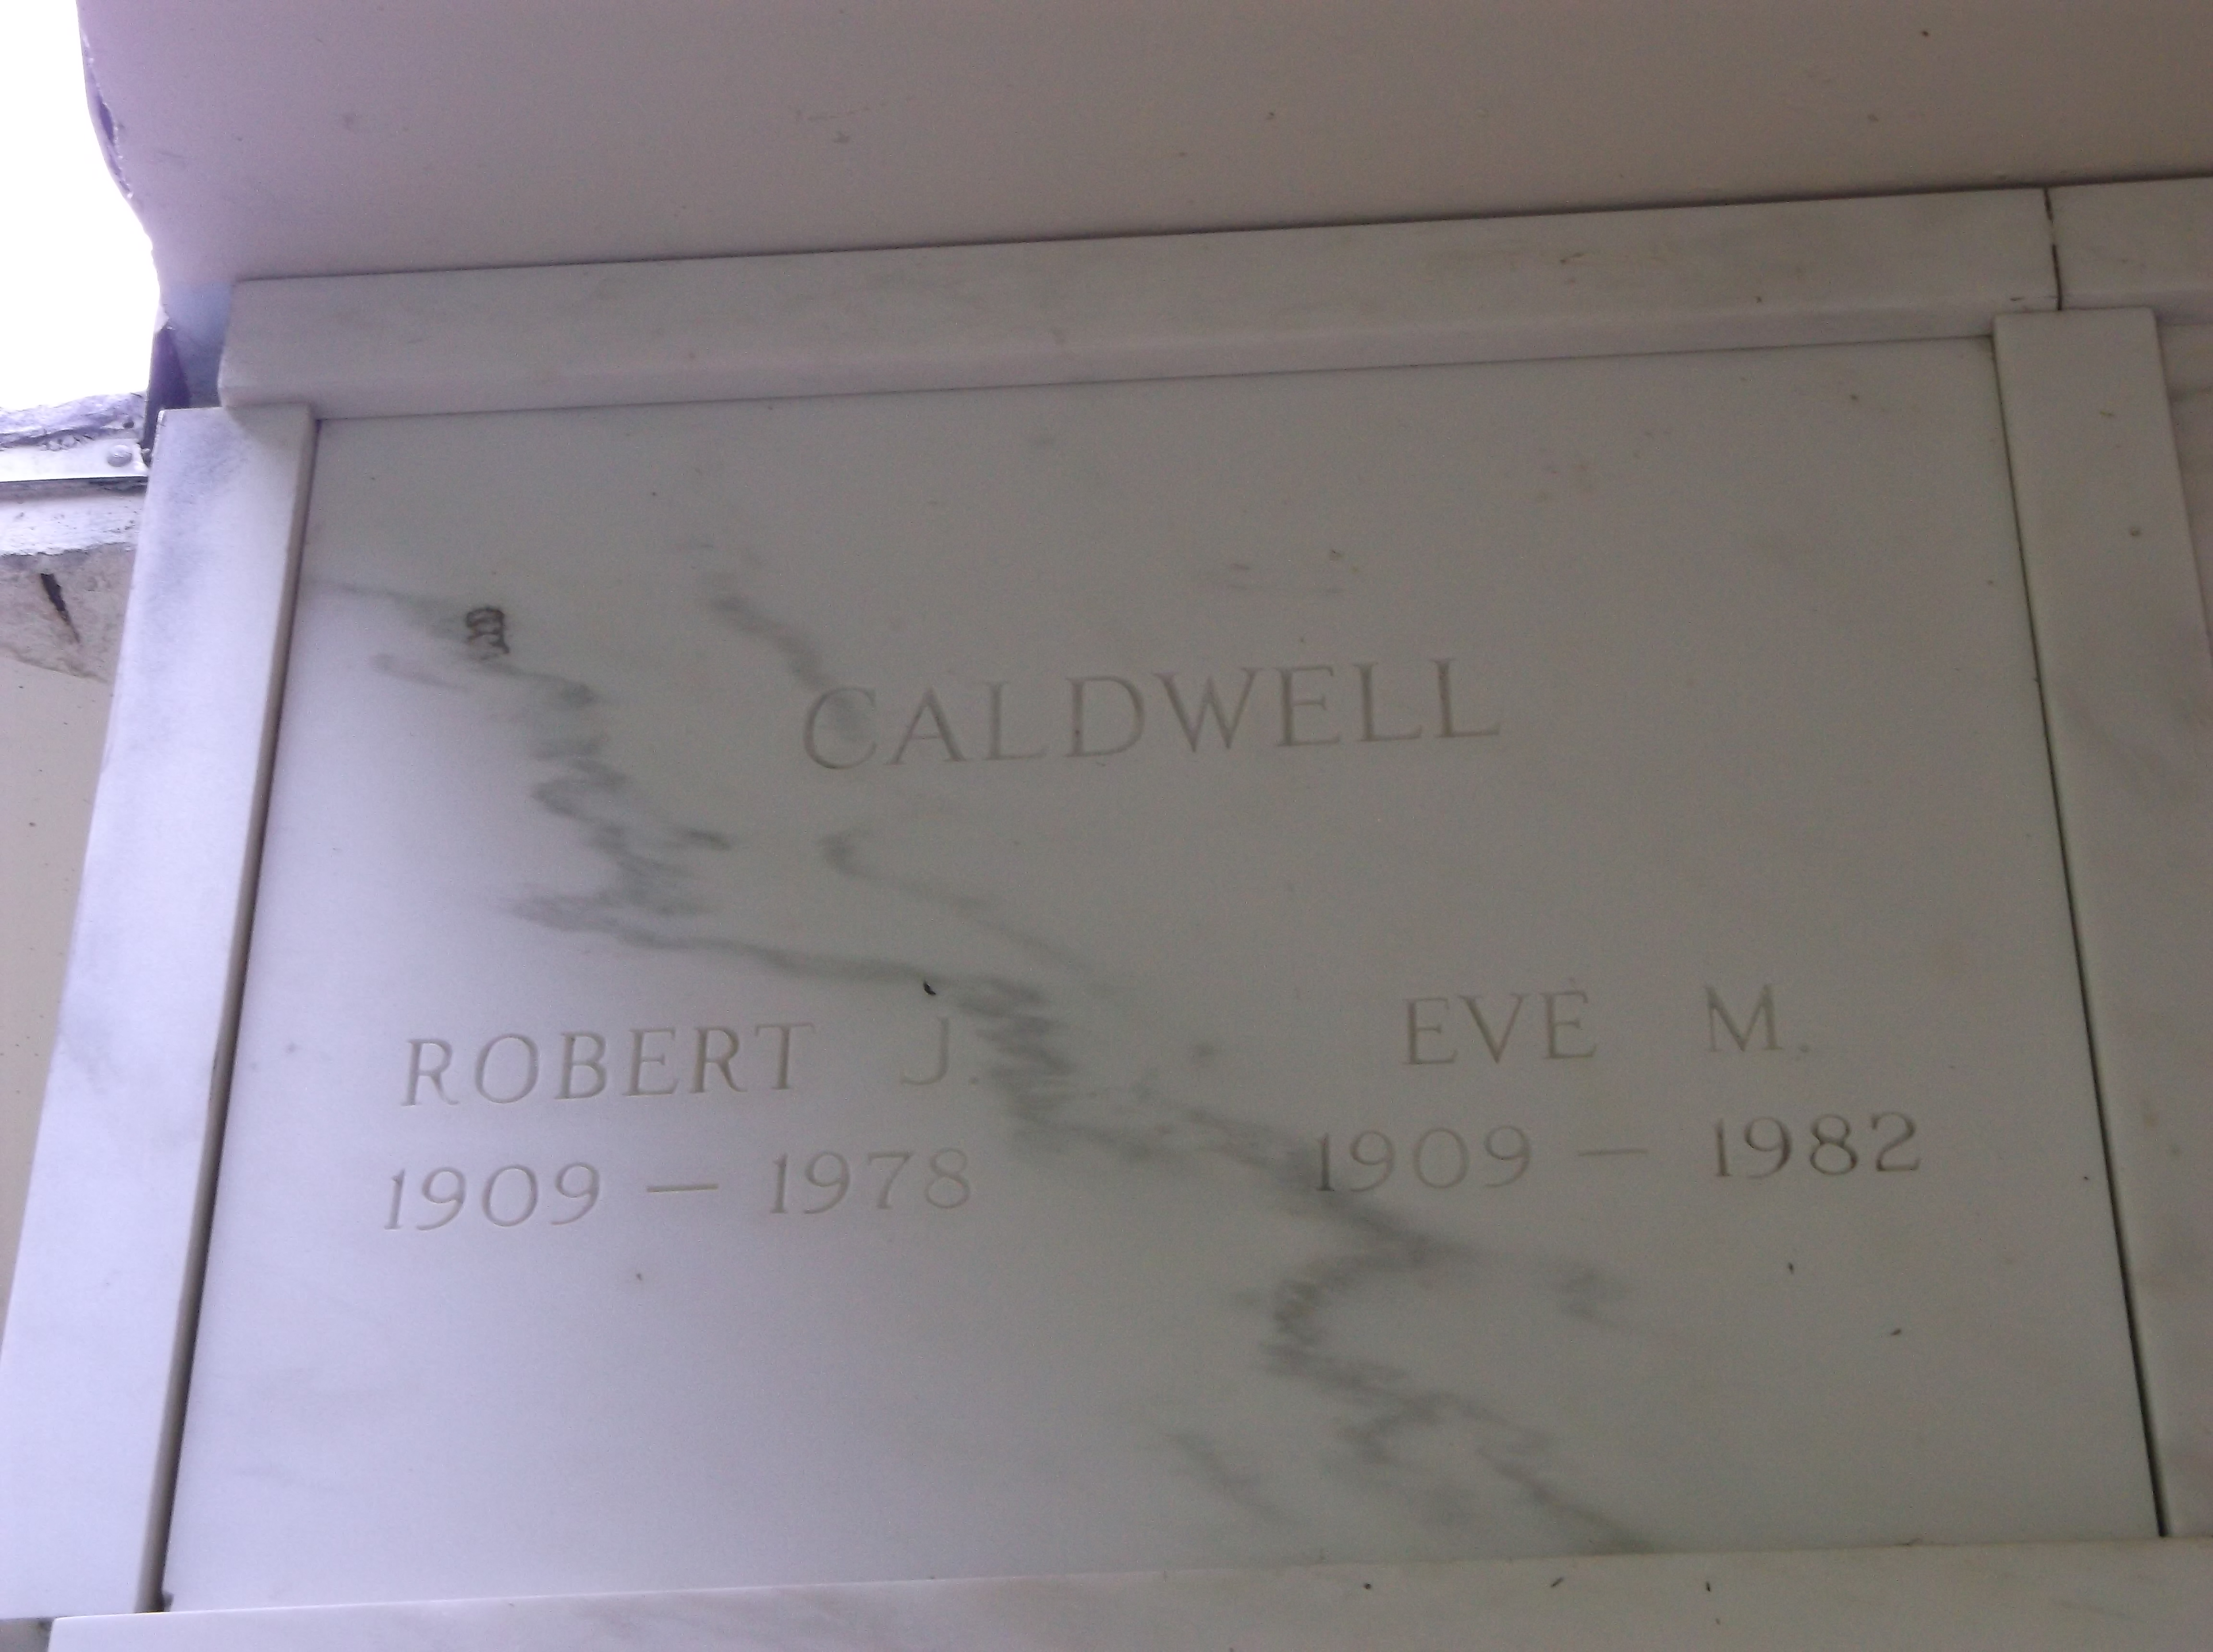 Eve M Caldwell